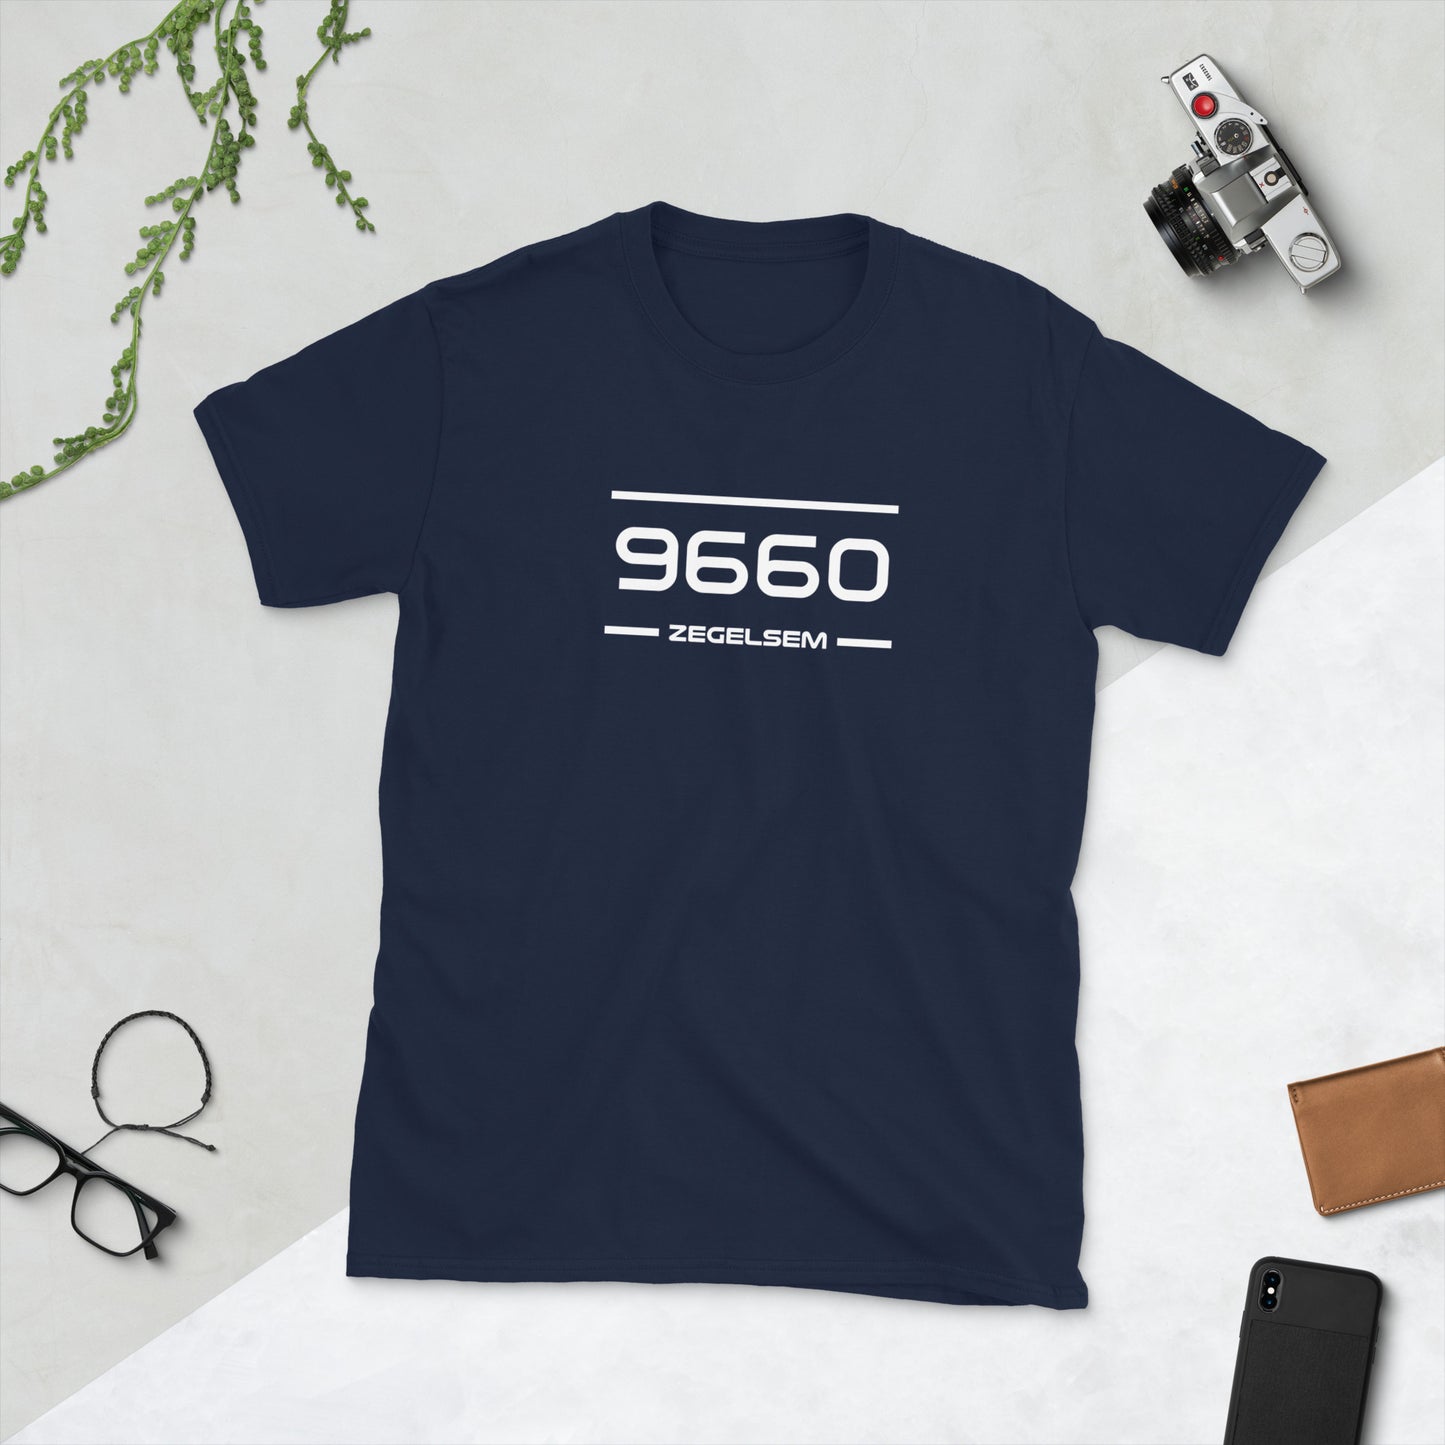 T-Shirt - 9660 - Zegelsem